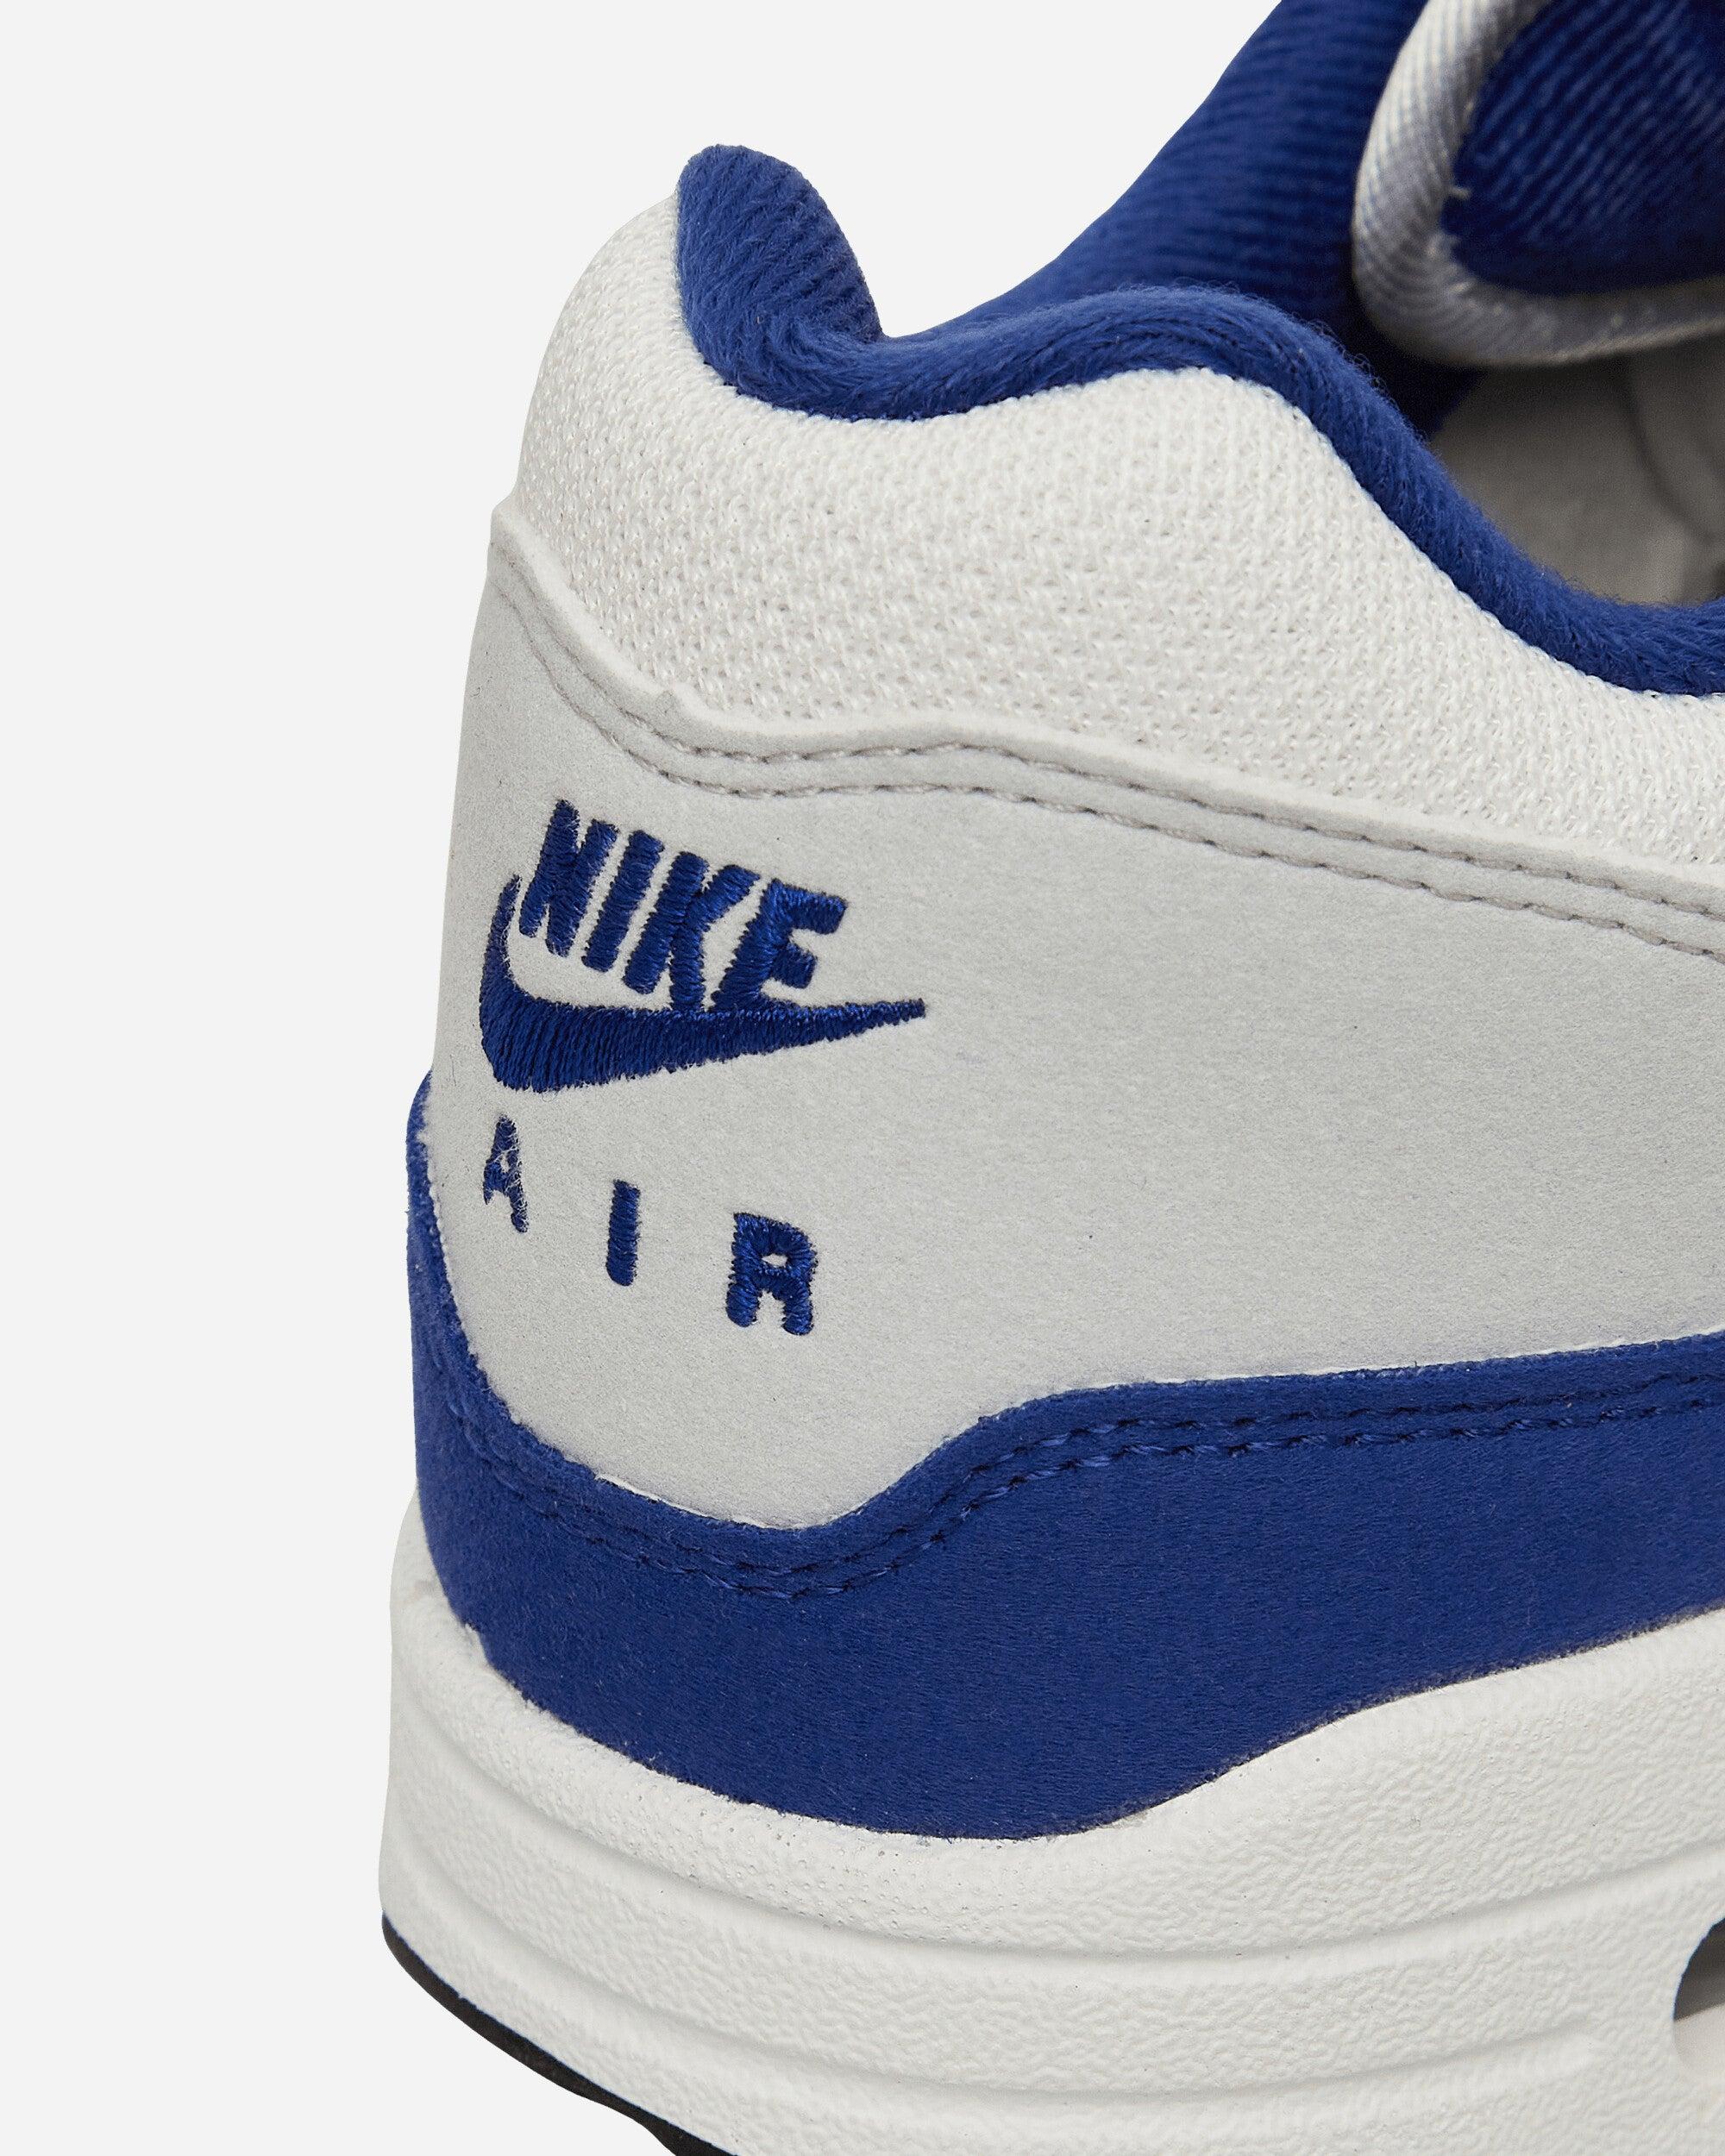 Nike Air Max 1 Sneakers White / Deep Royal Blue for Men